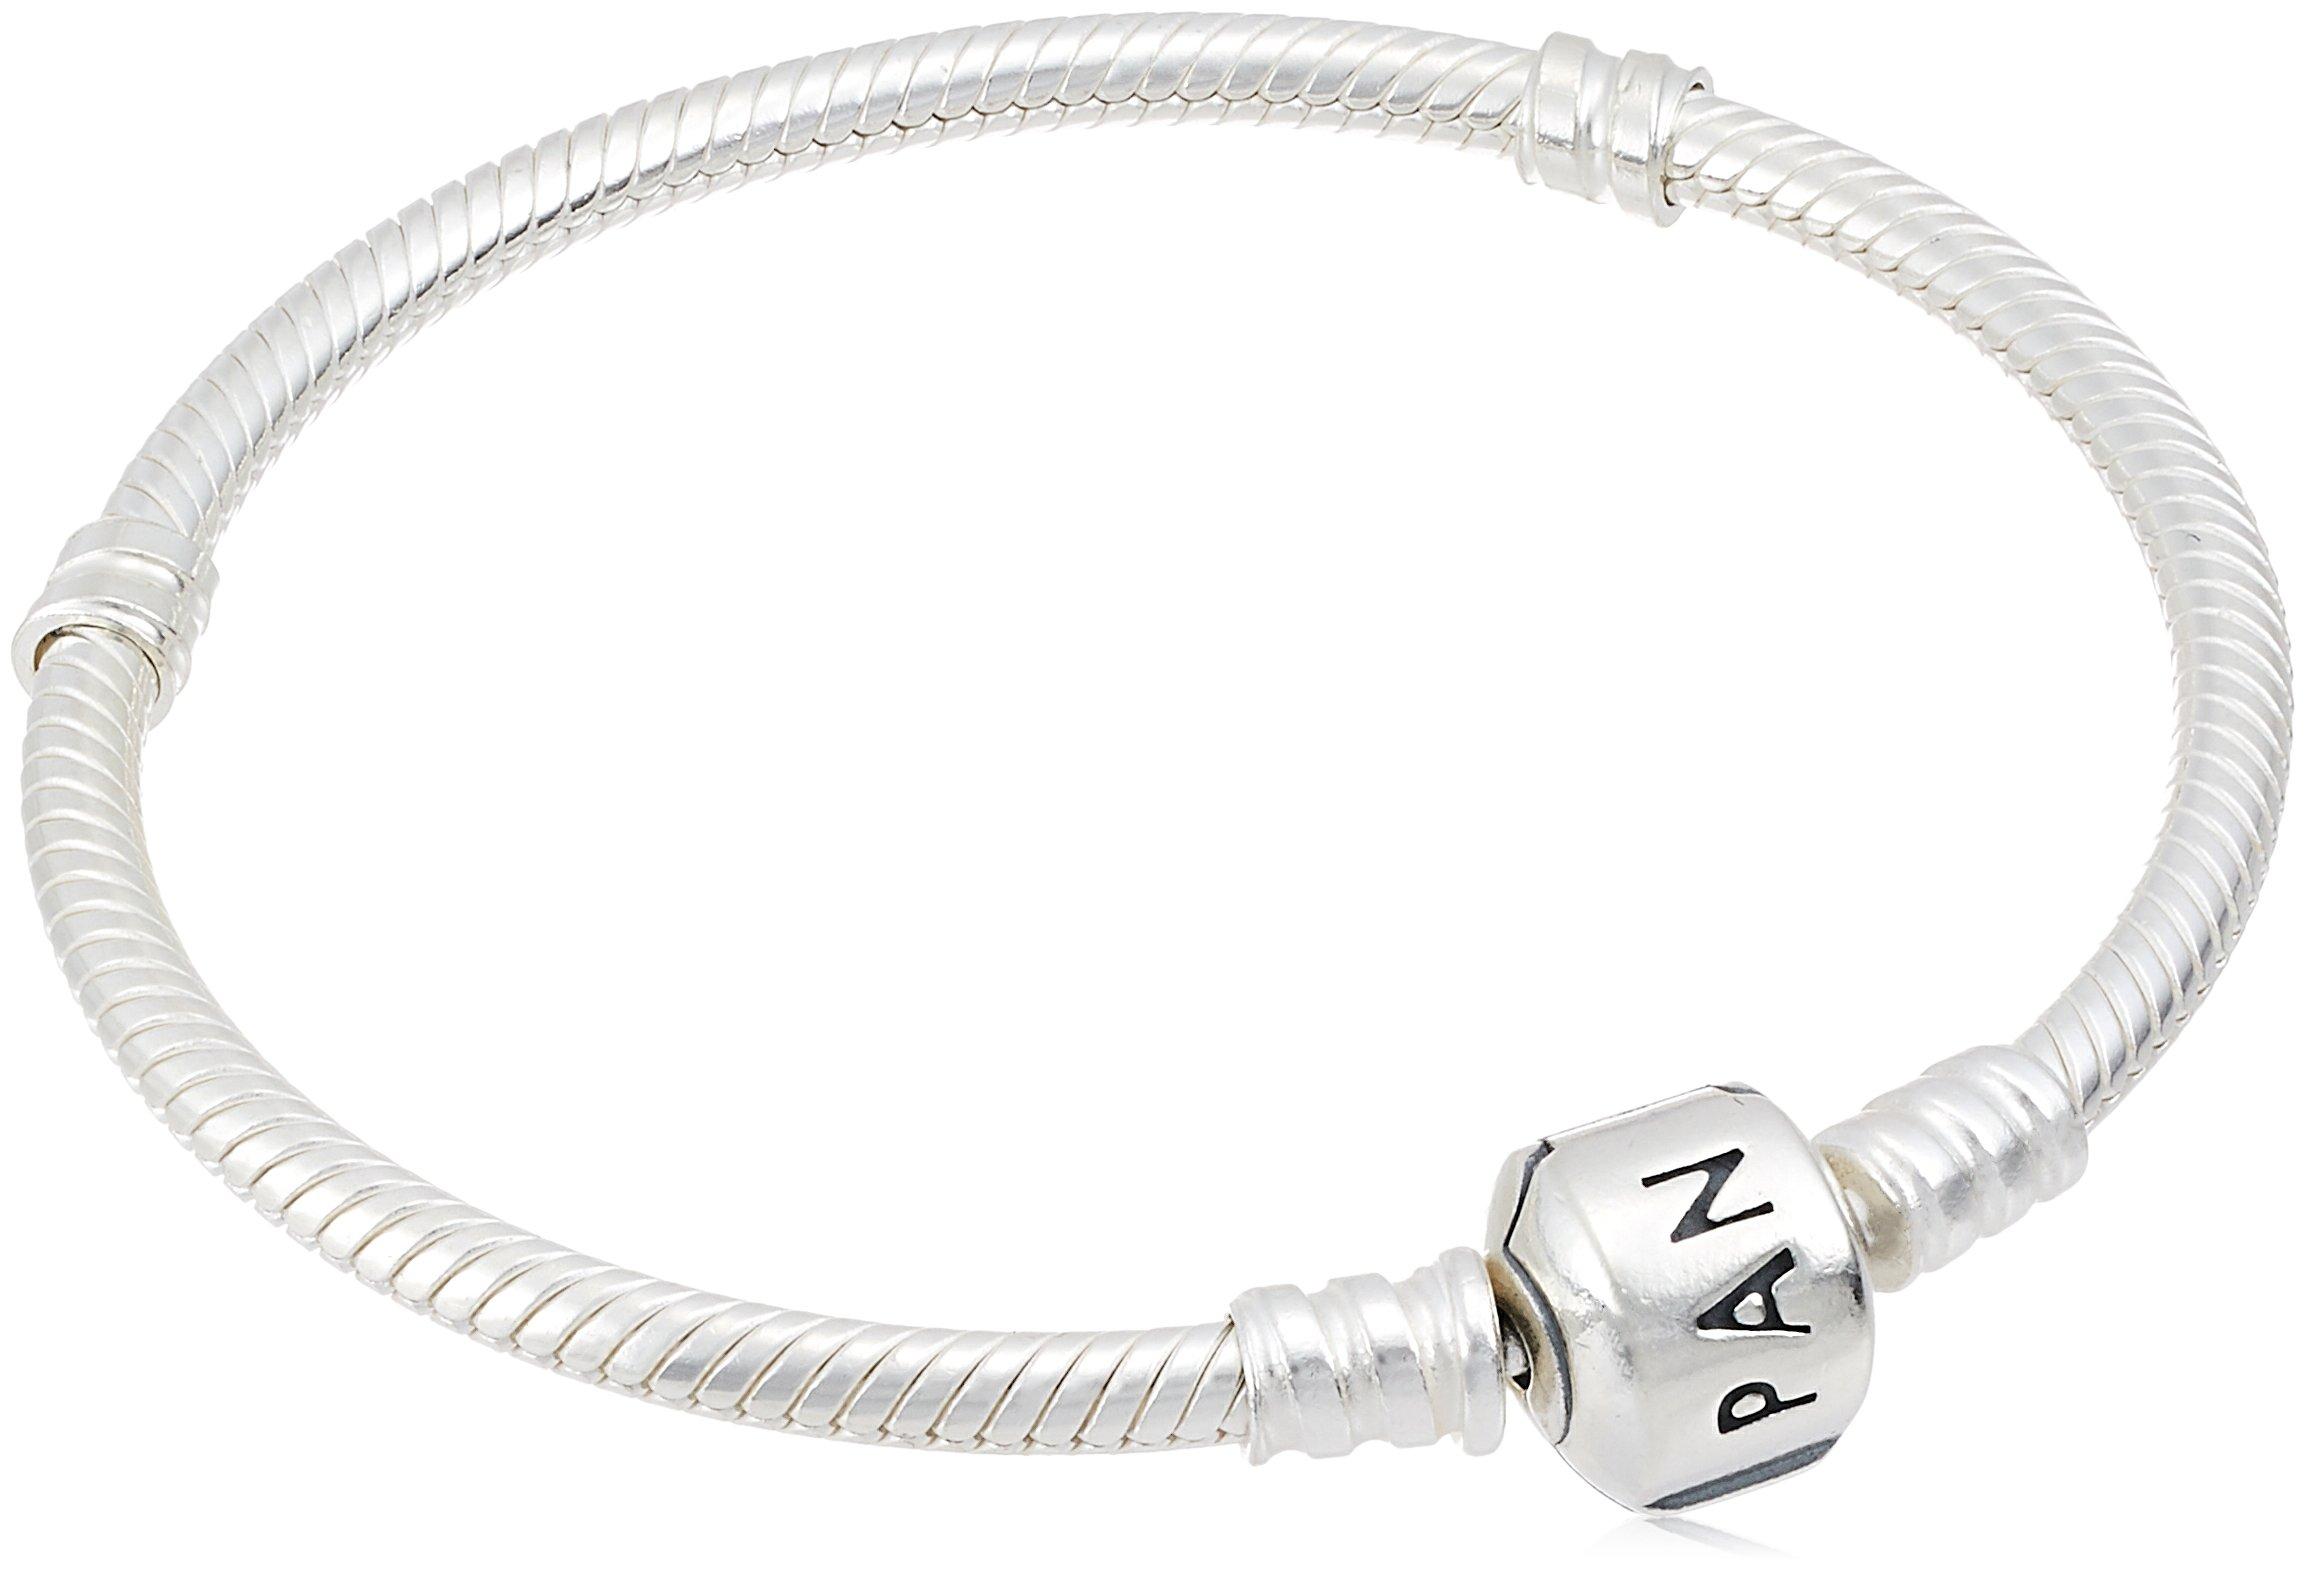 PANDORA Women Silver Charm Bracelet - 590702hv-19 in Metallic - Save 14% -  Lyst